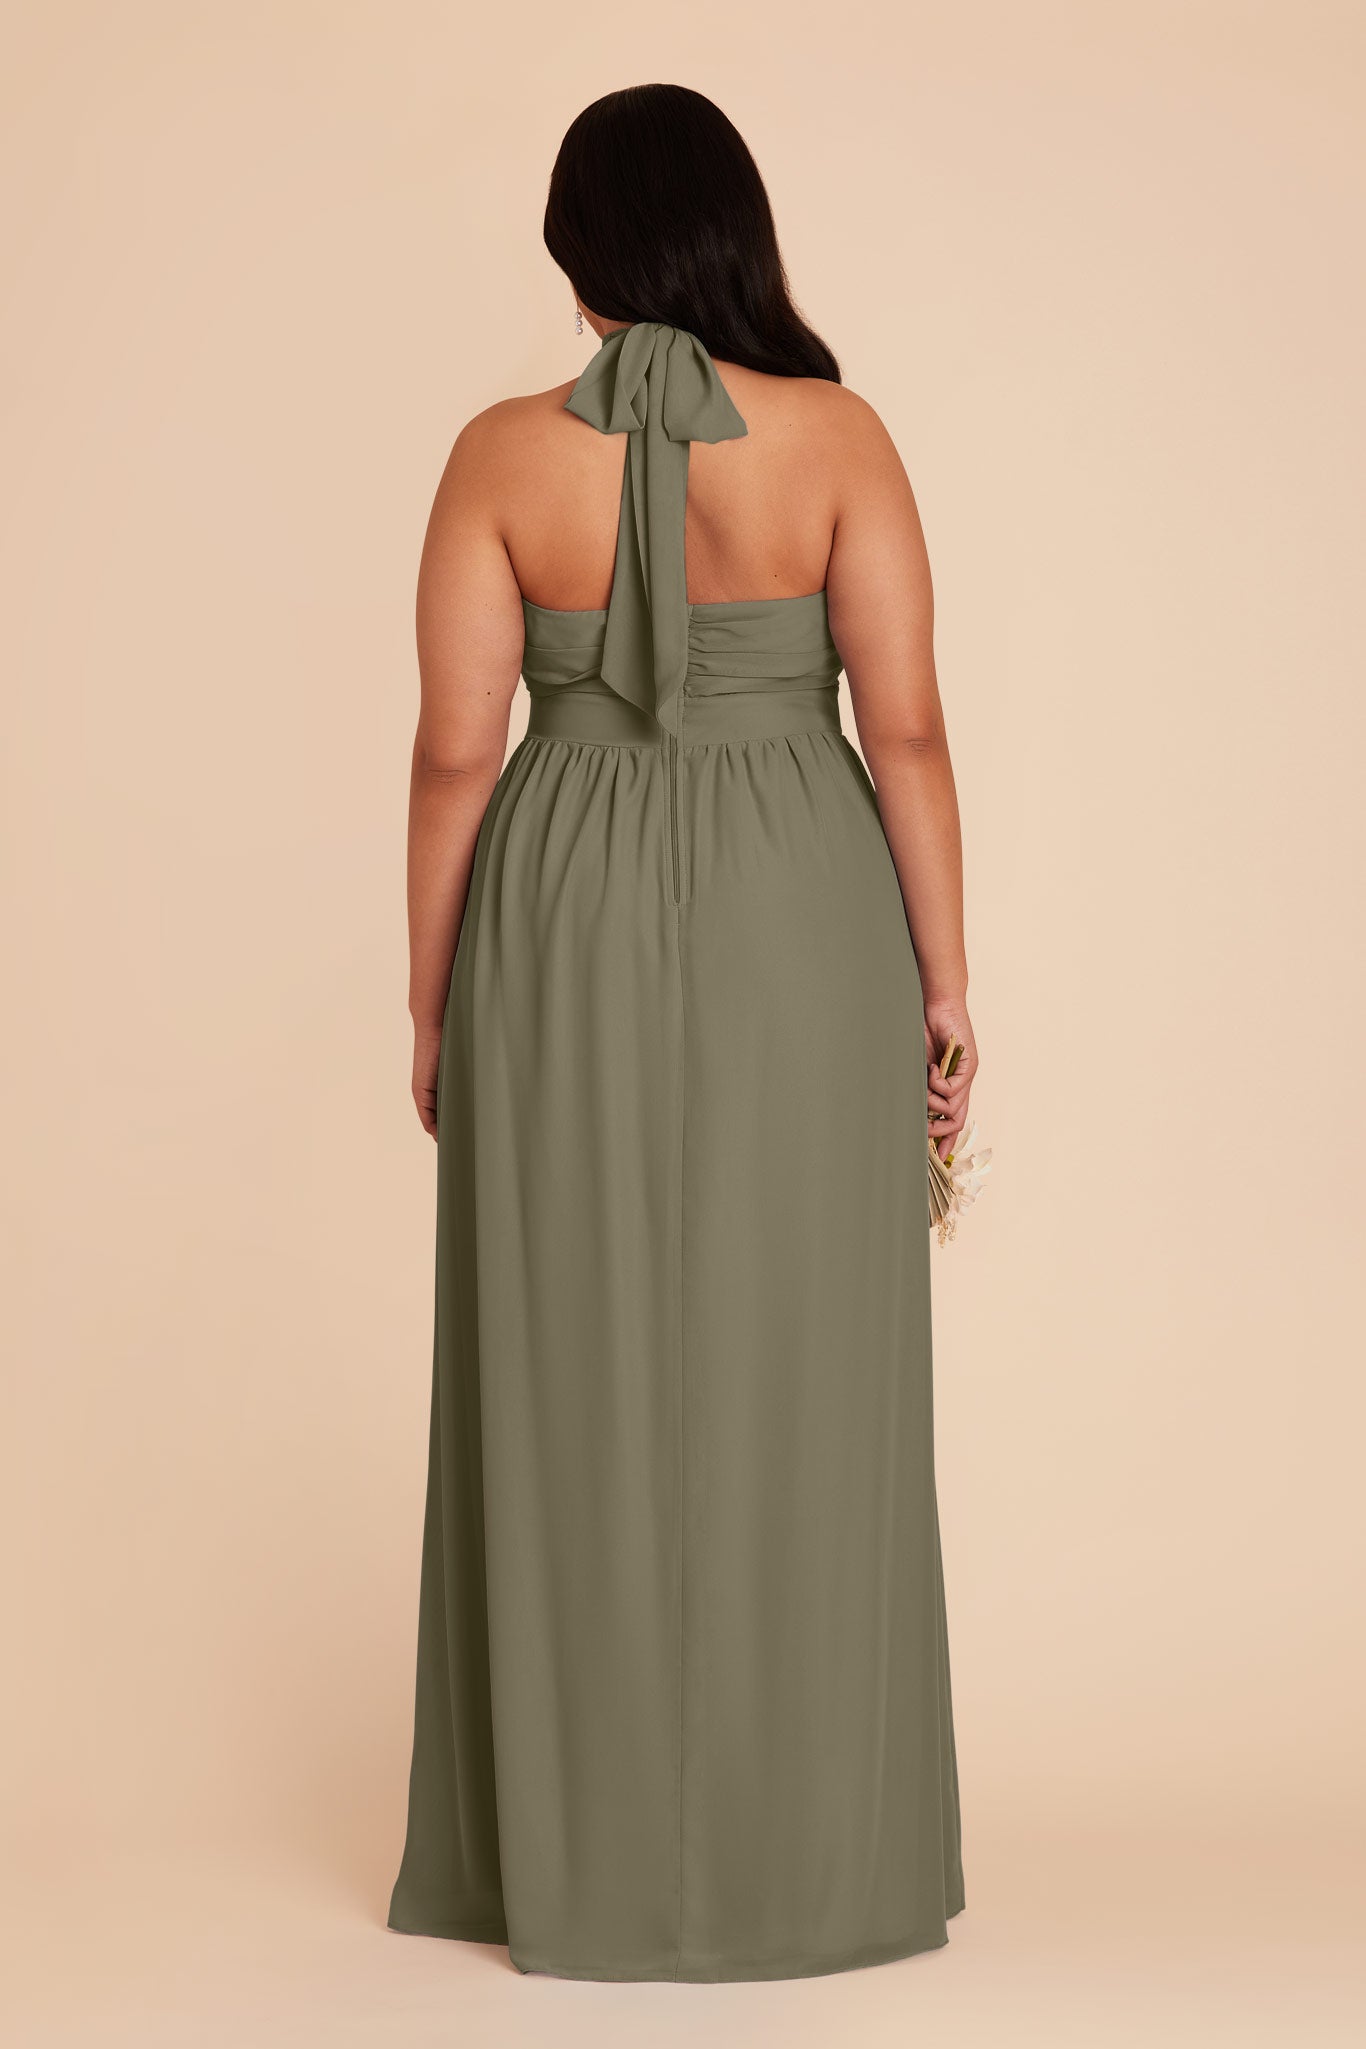 Moss Green Joyce Chiffon Dress by Birdy Grey